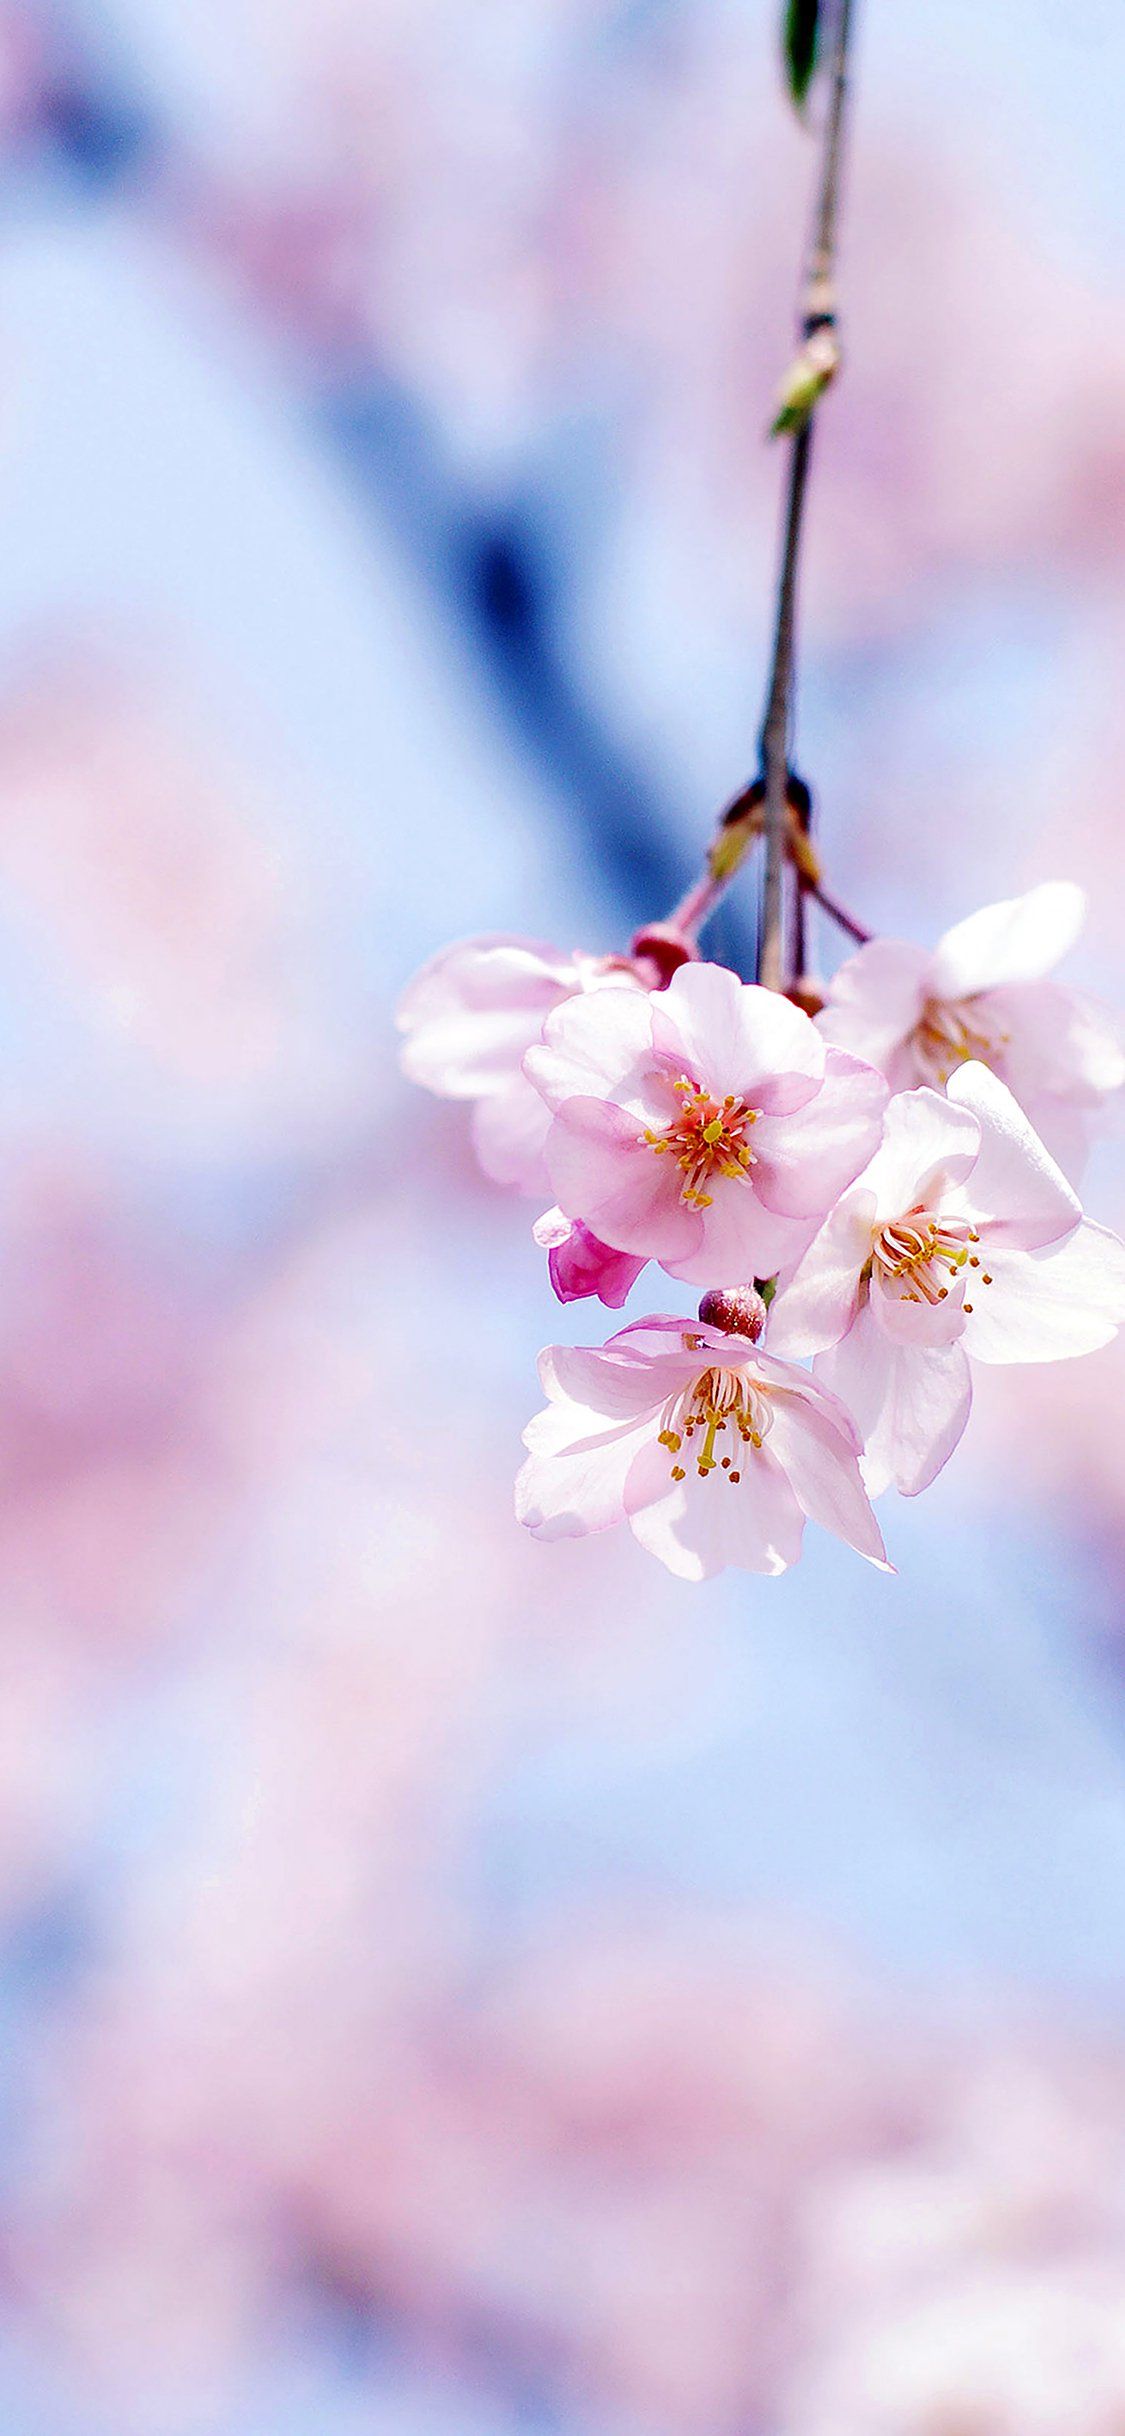 Cherry blossom bw gongsateam flower iPhone X Wallpaper Free Download